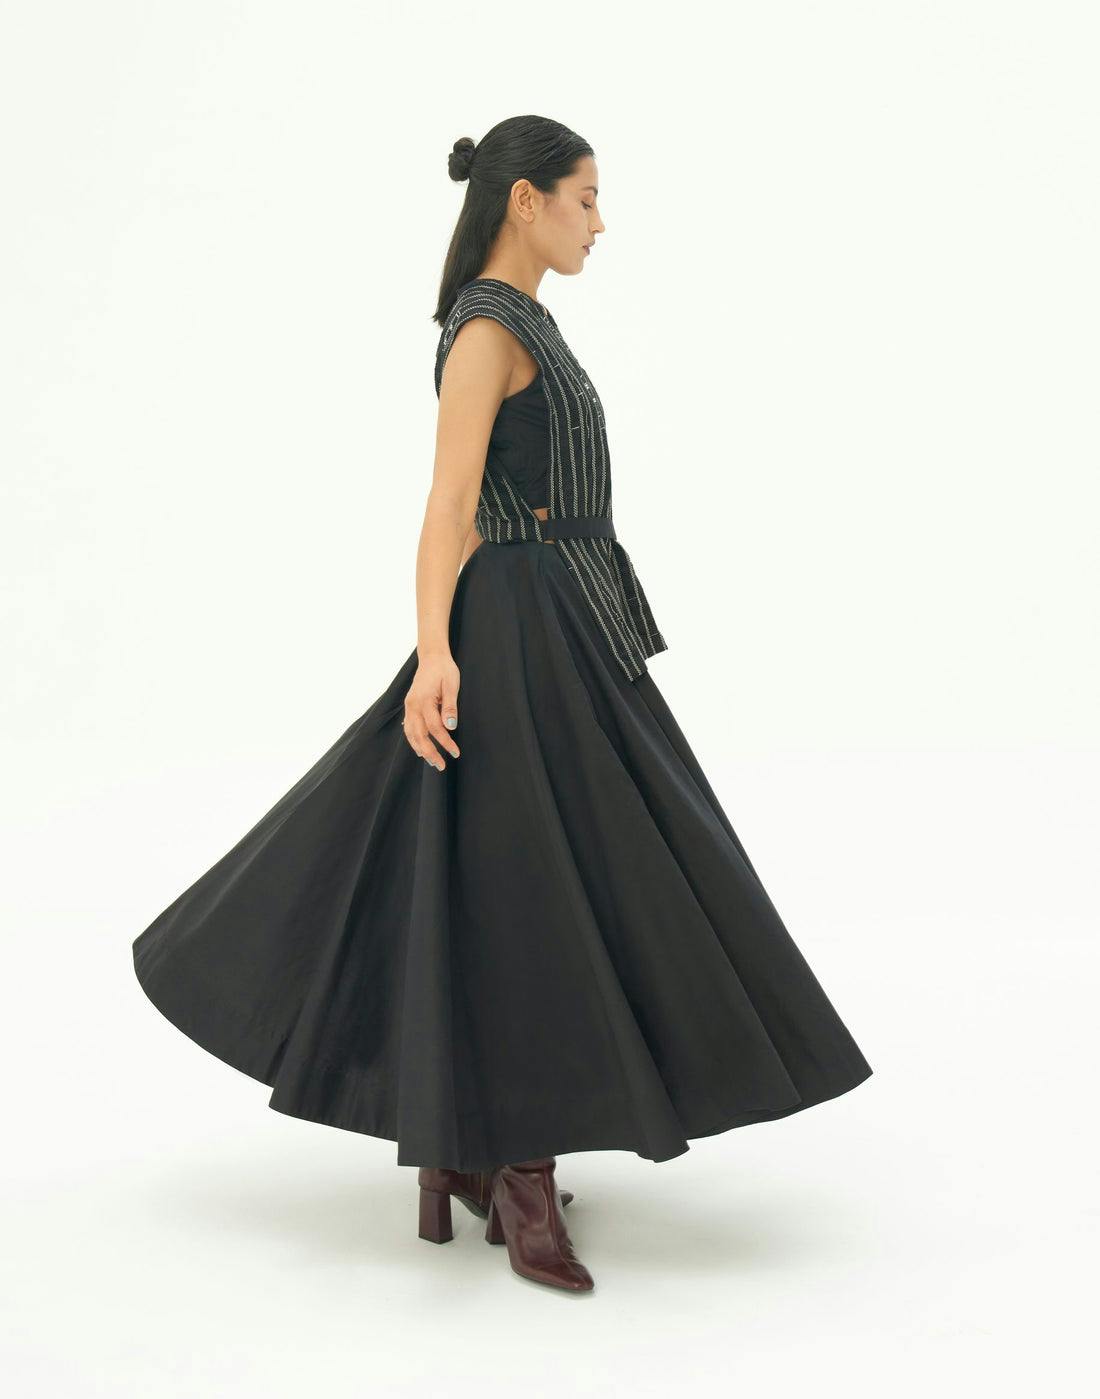 Twirl in black dress, a product by Corpora Studio